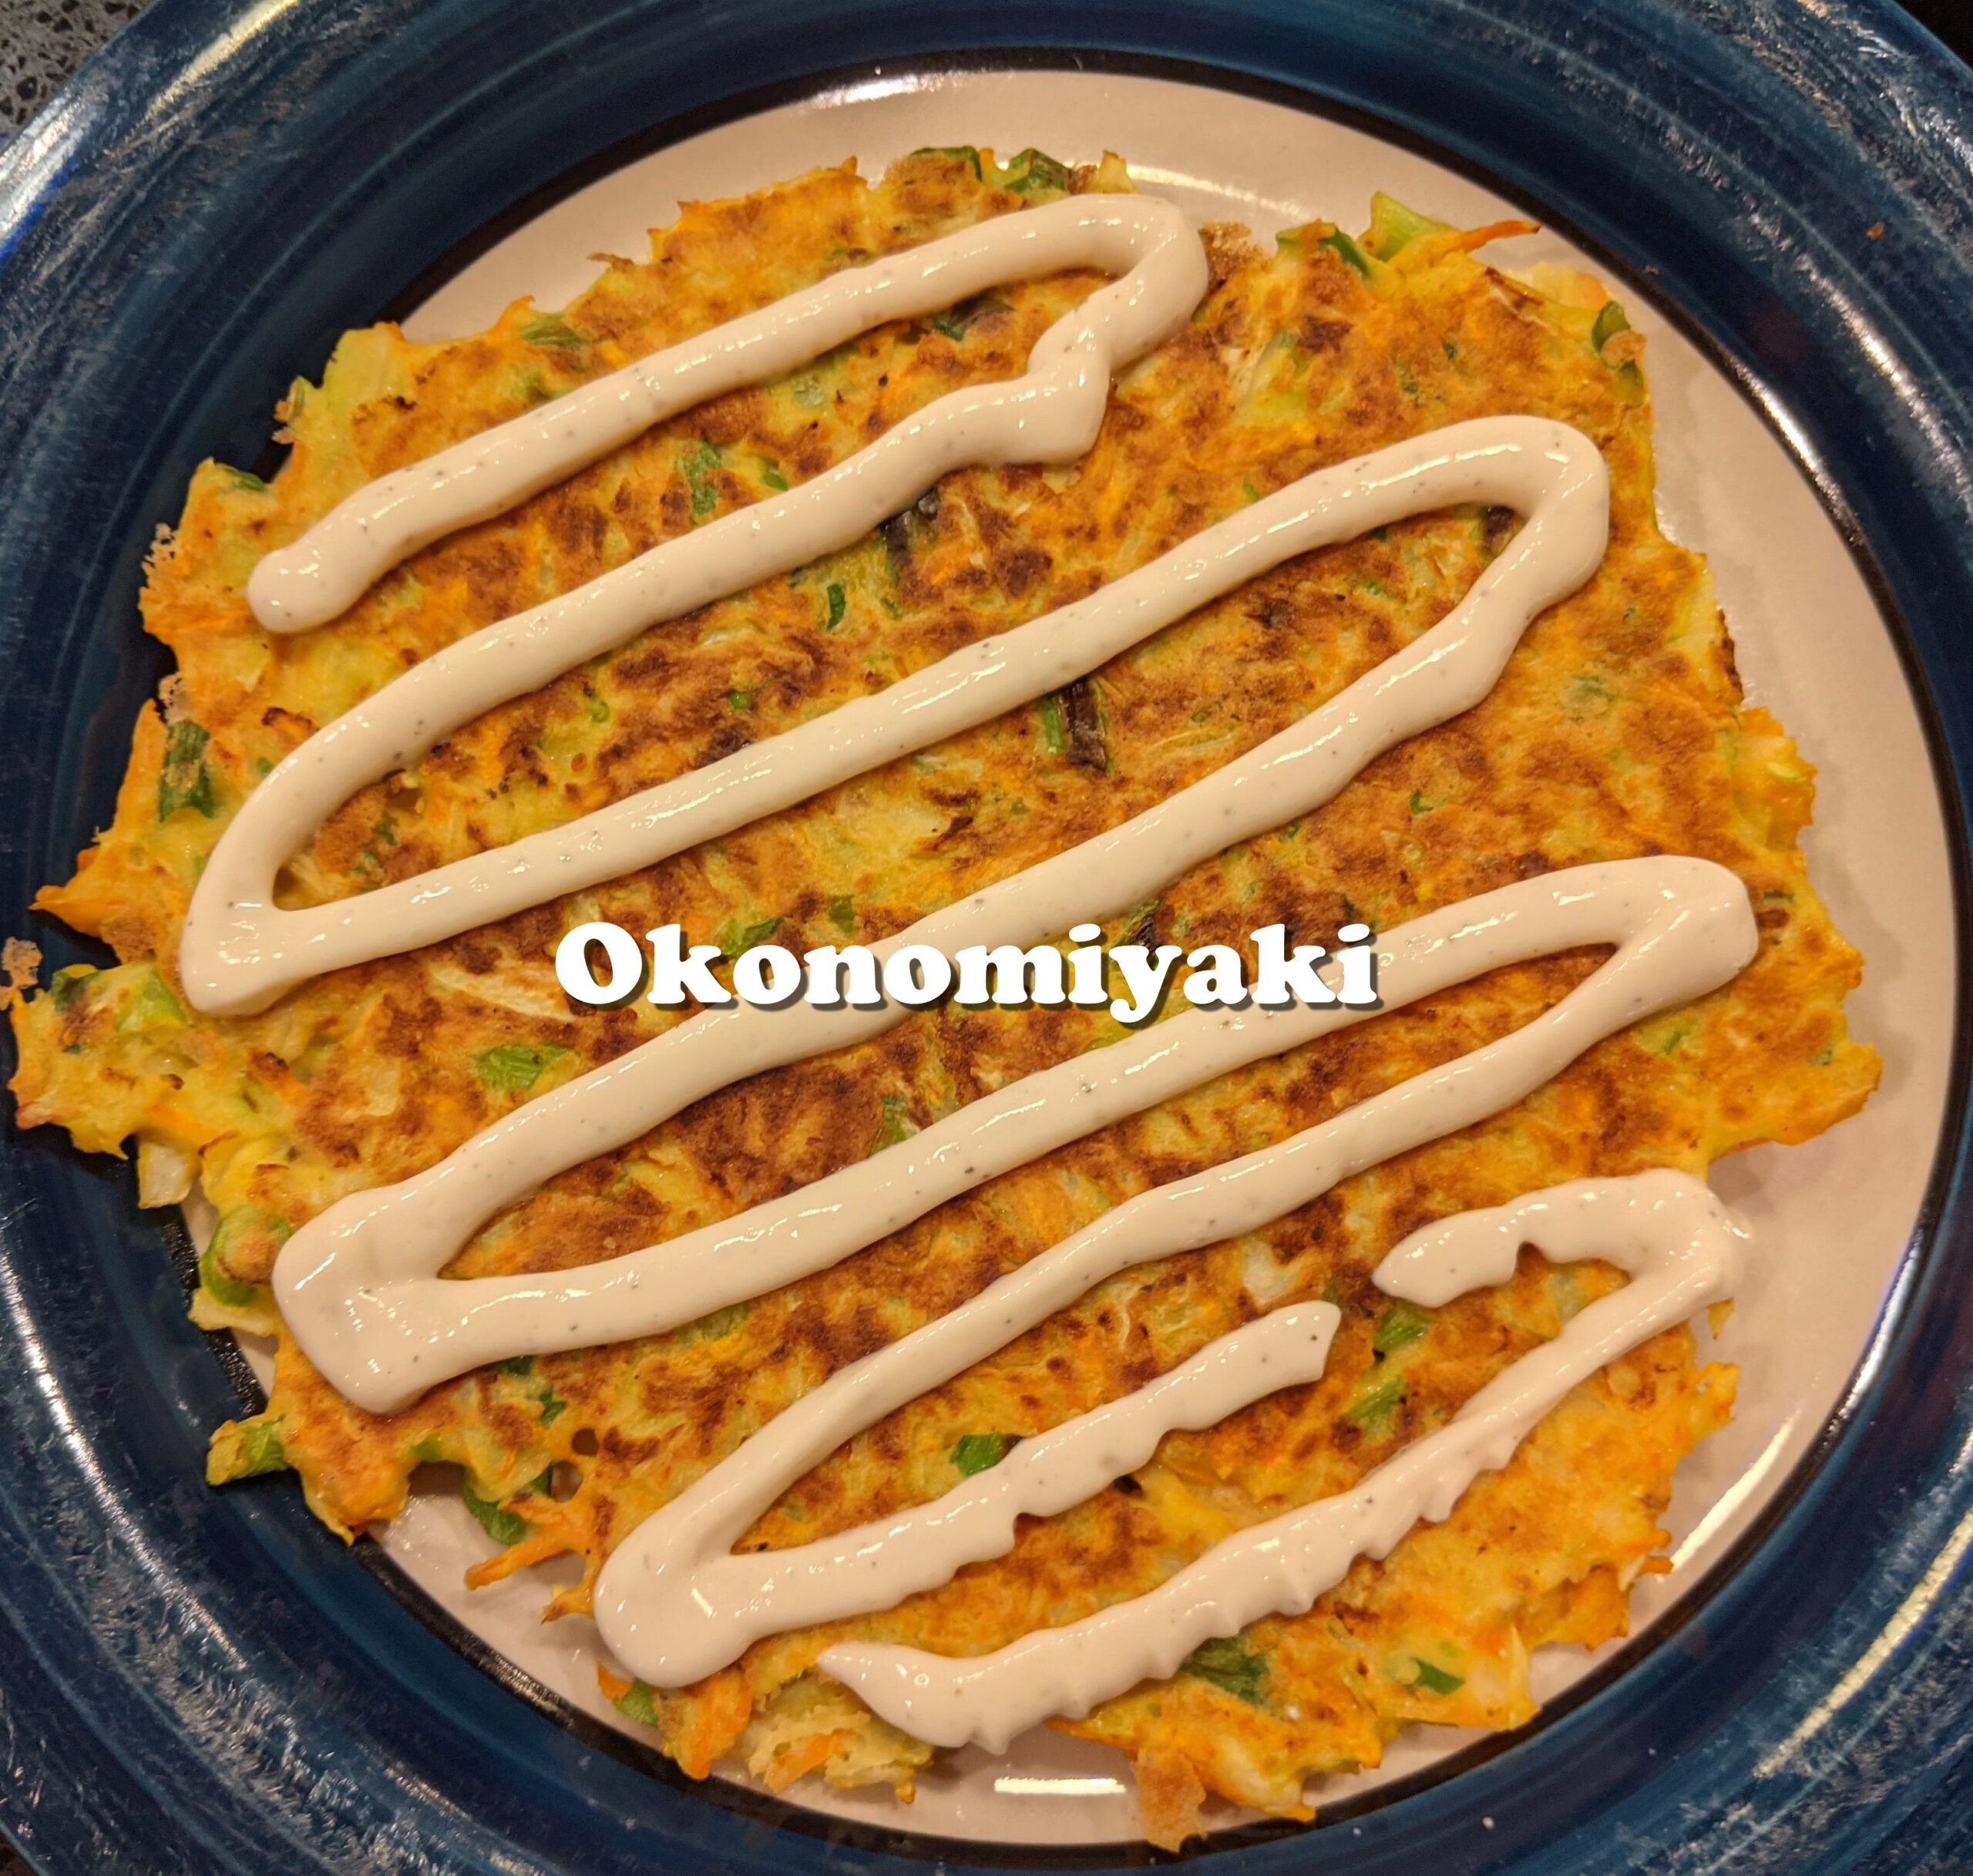 https://valeriesrecipes.com/wp-content/uploads/2021/01/okonomiyaki-scaled.jpg